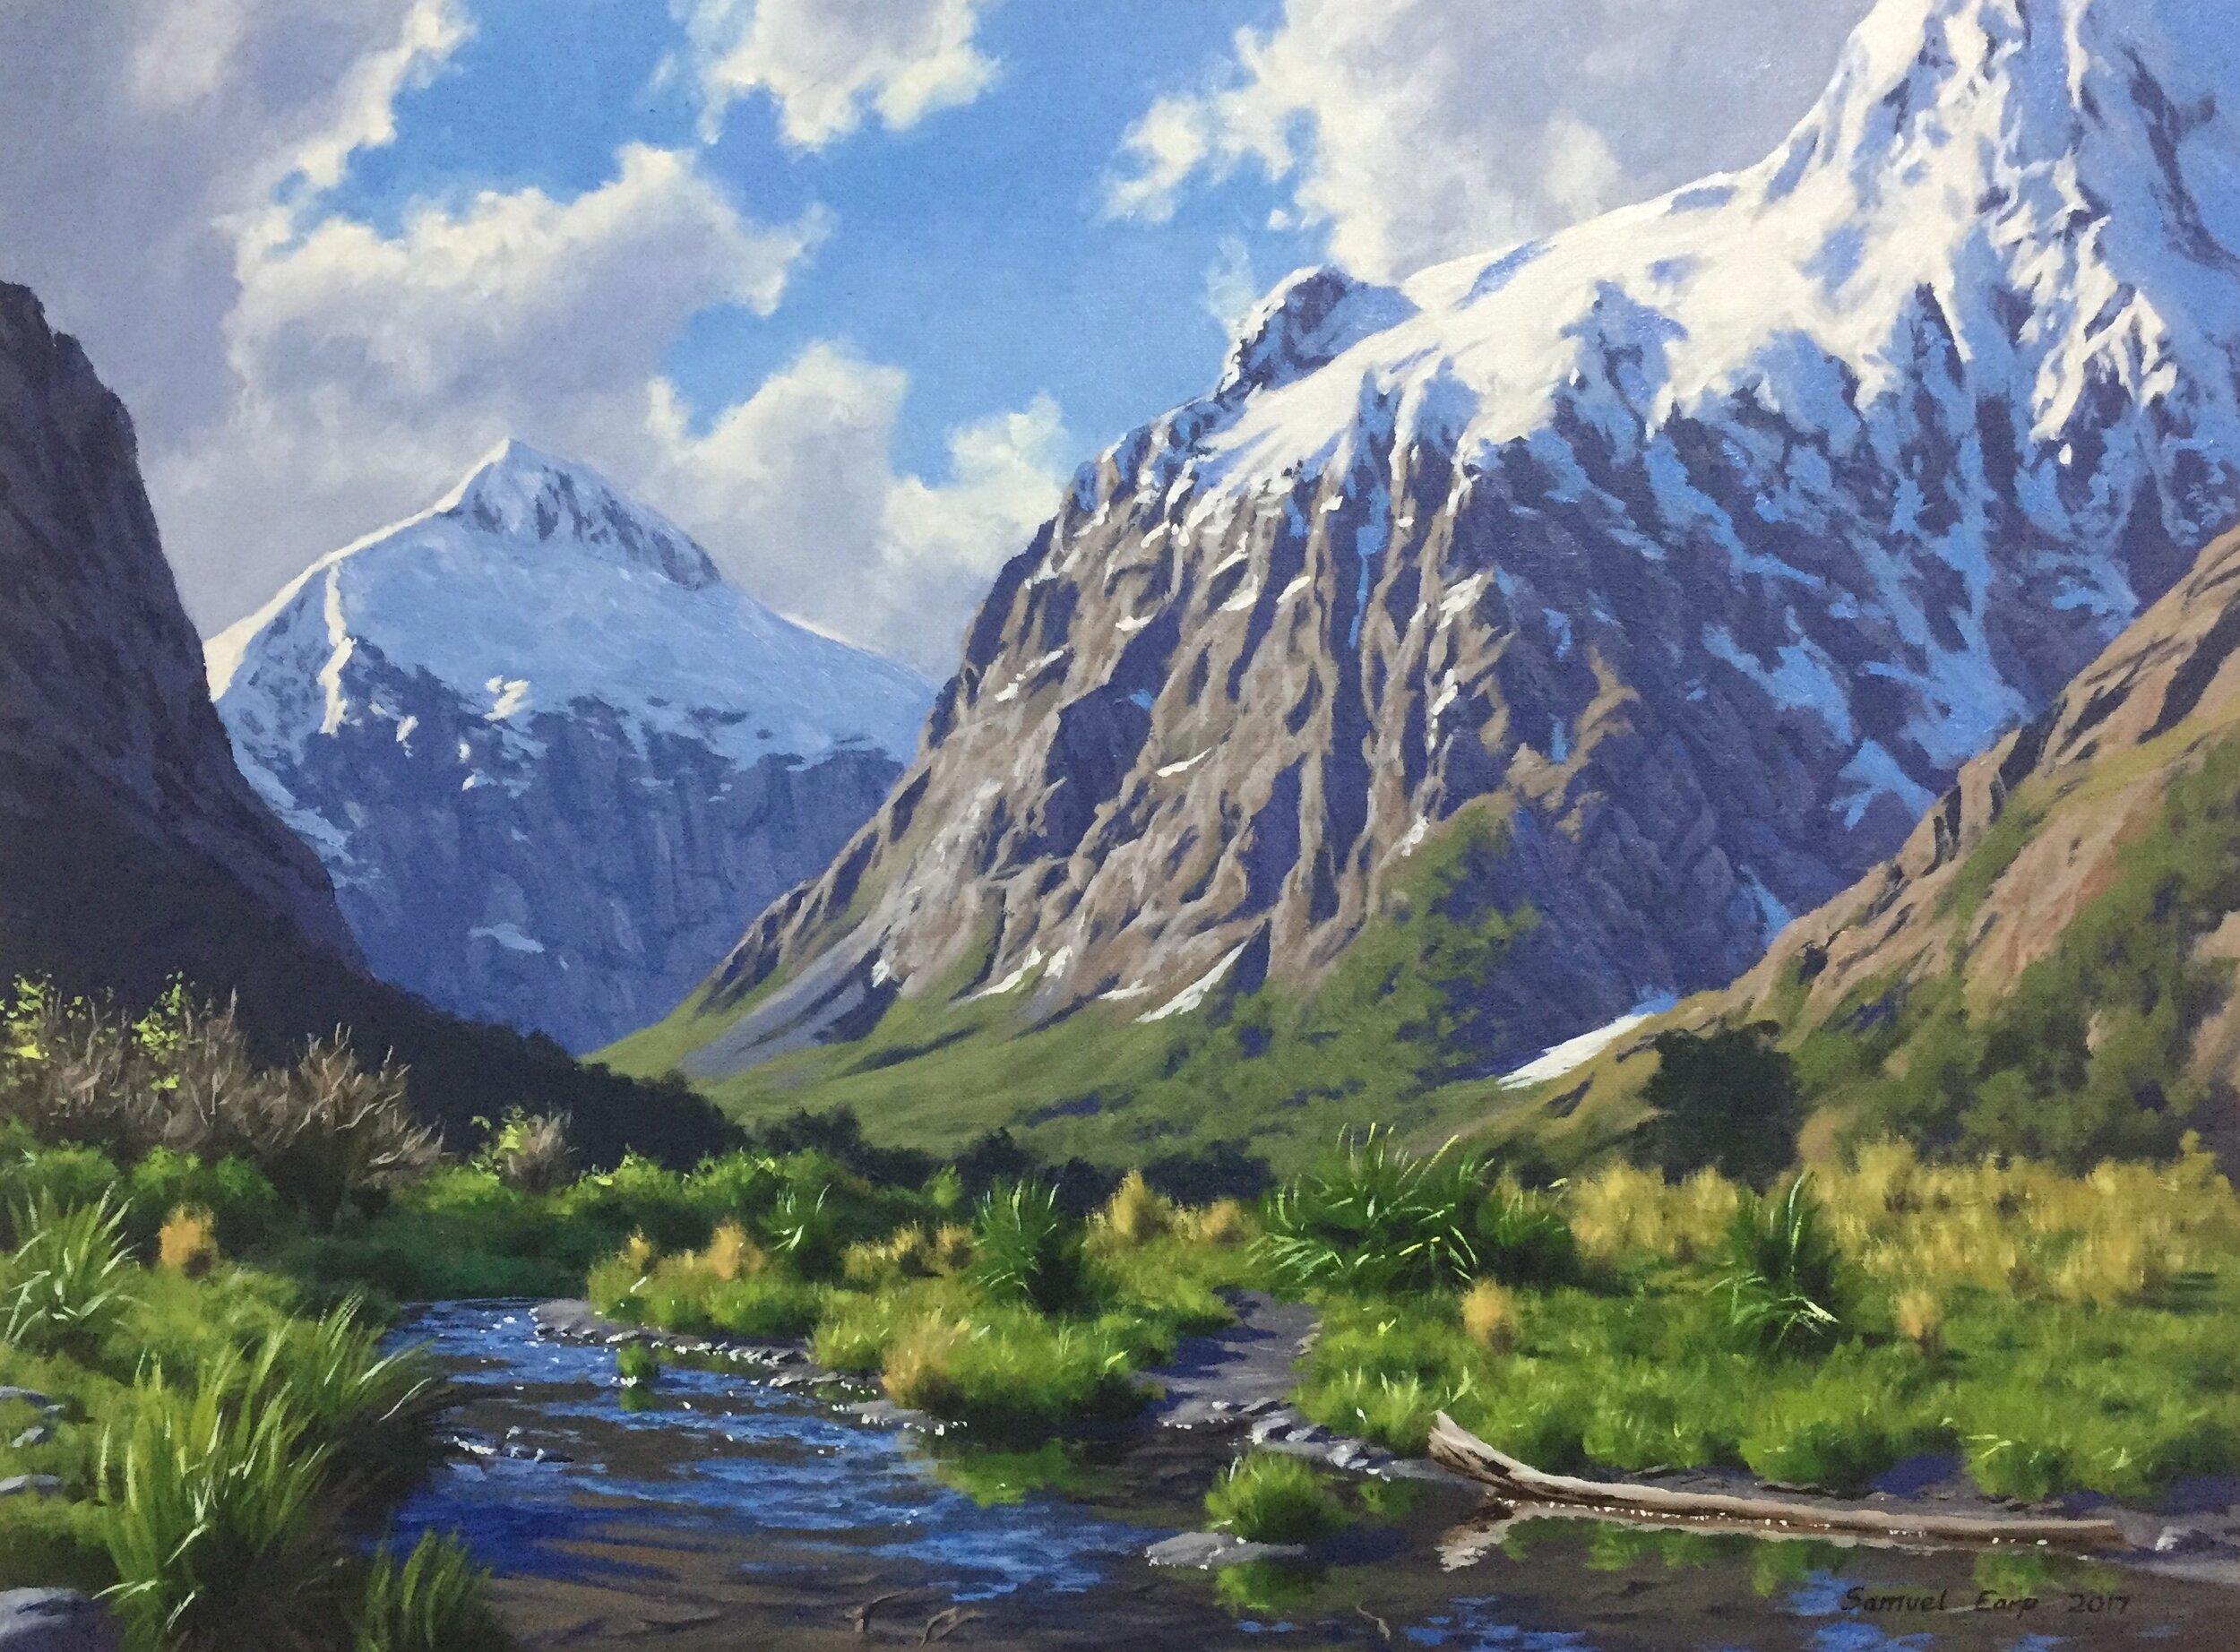 Mt Talbot and Mt Crosscut - Samuel Earp landscape artist.jpg